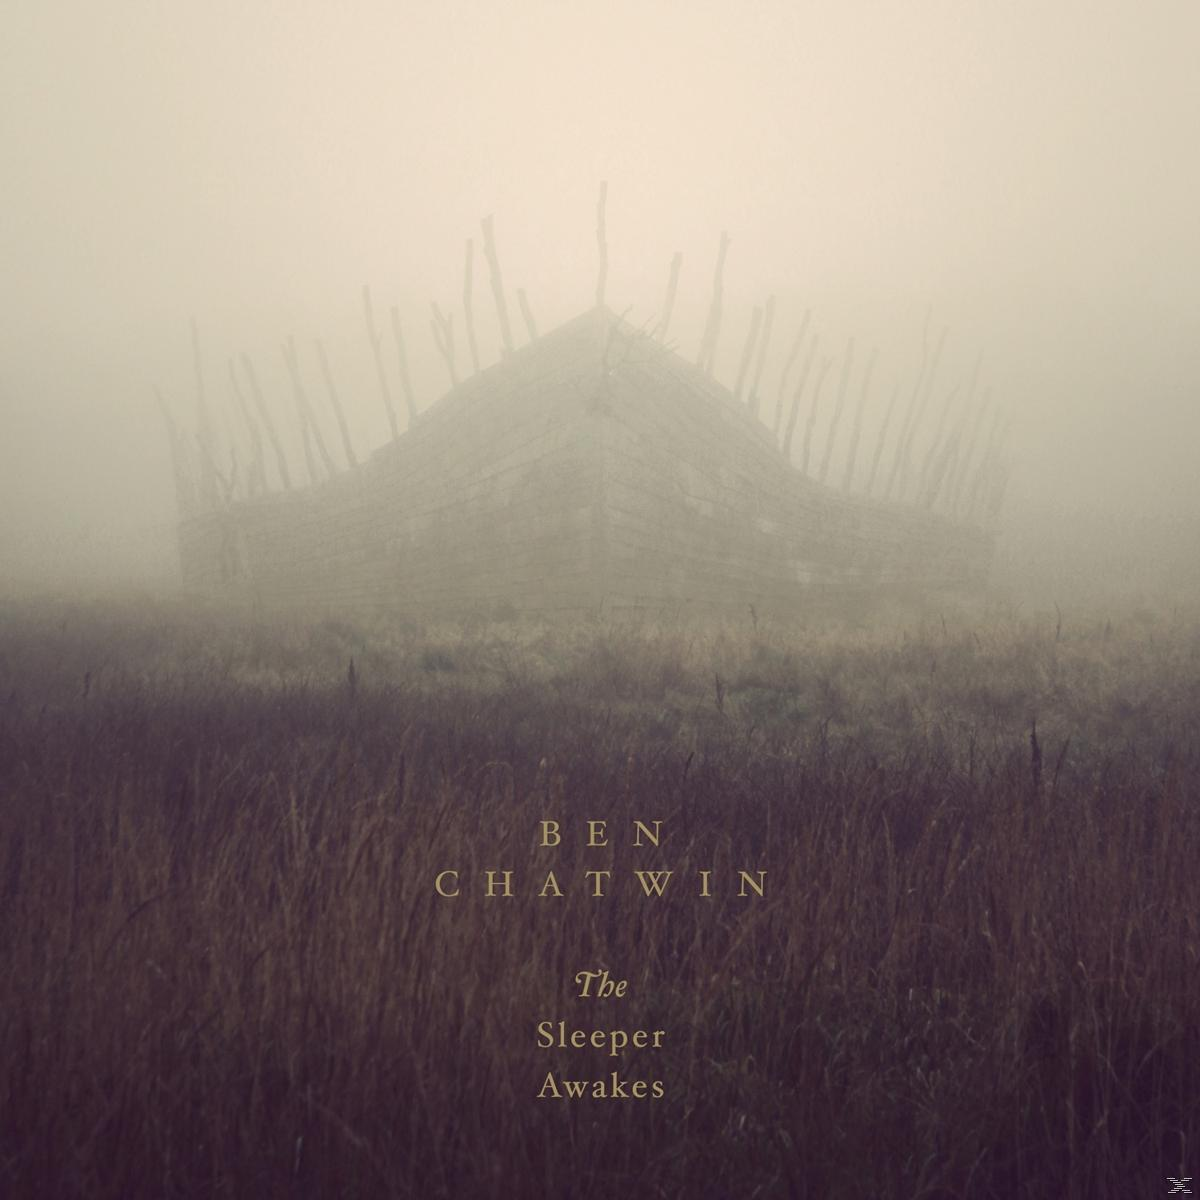 Chatwin - Ben (CD) - Awakes Sleeper The